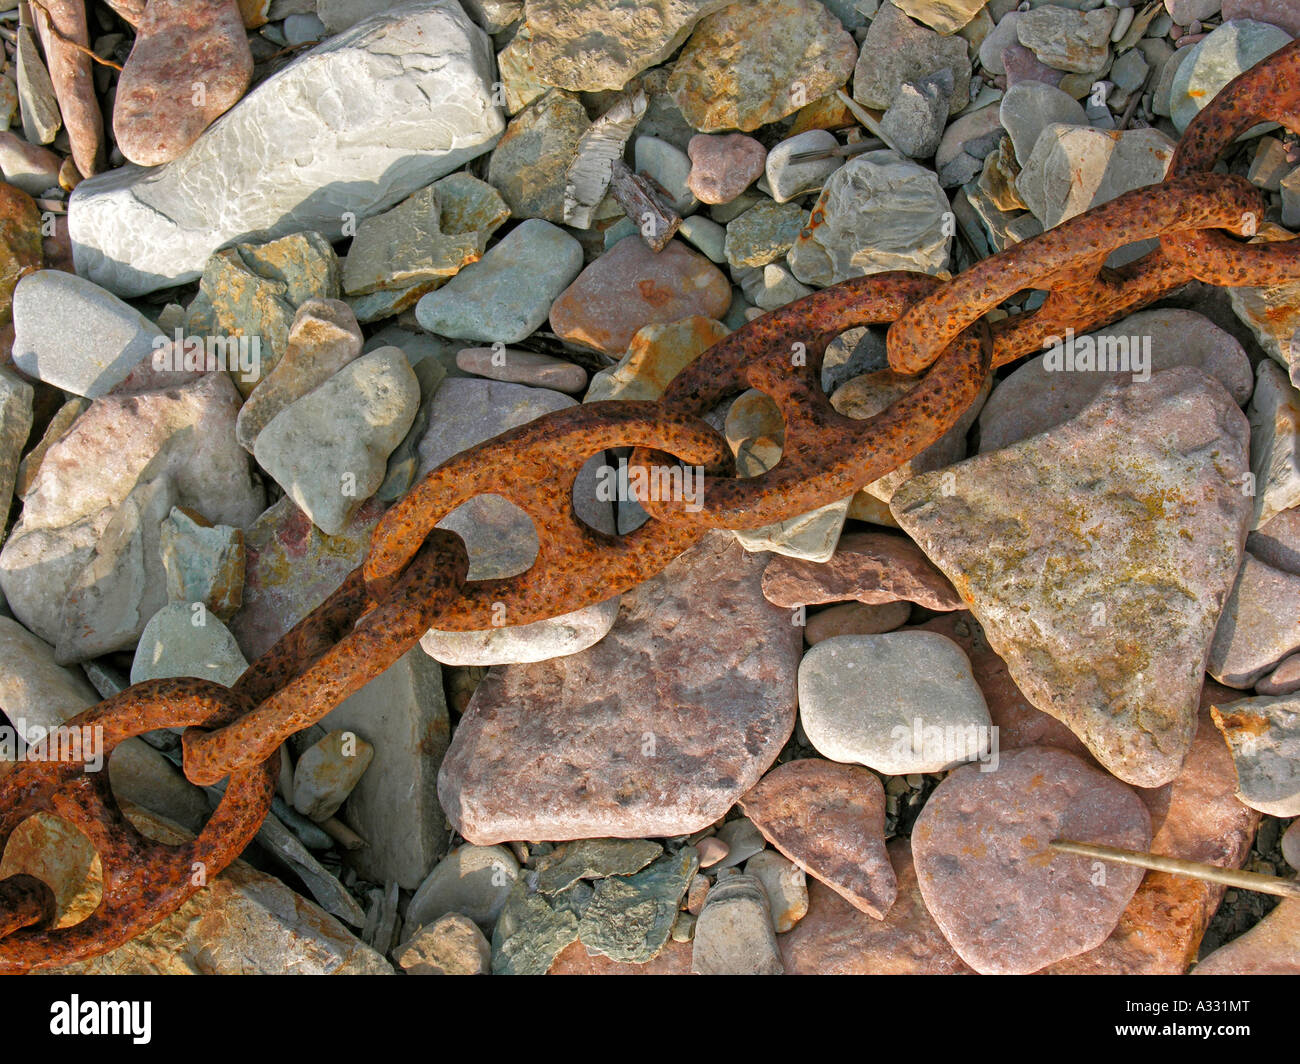 old rusty iron chain on stones Stock Photo